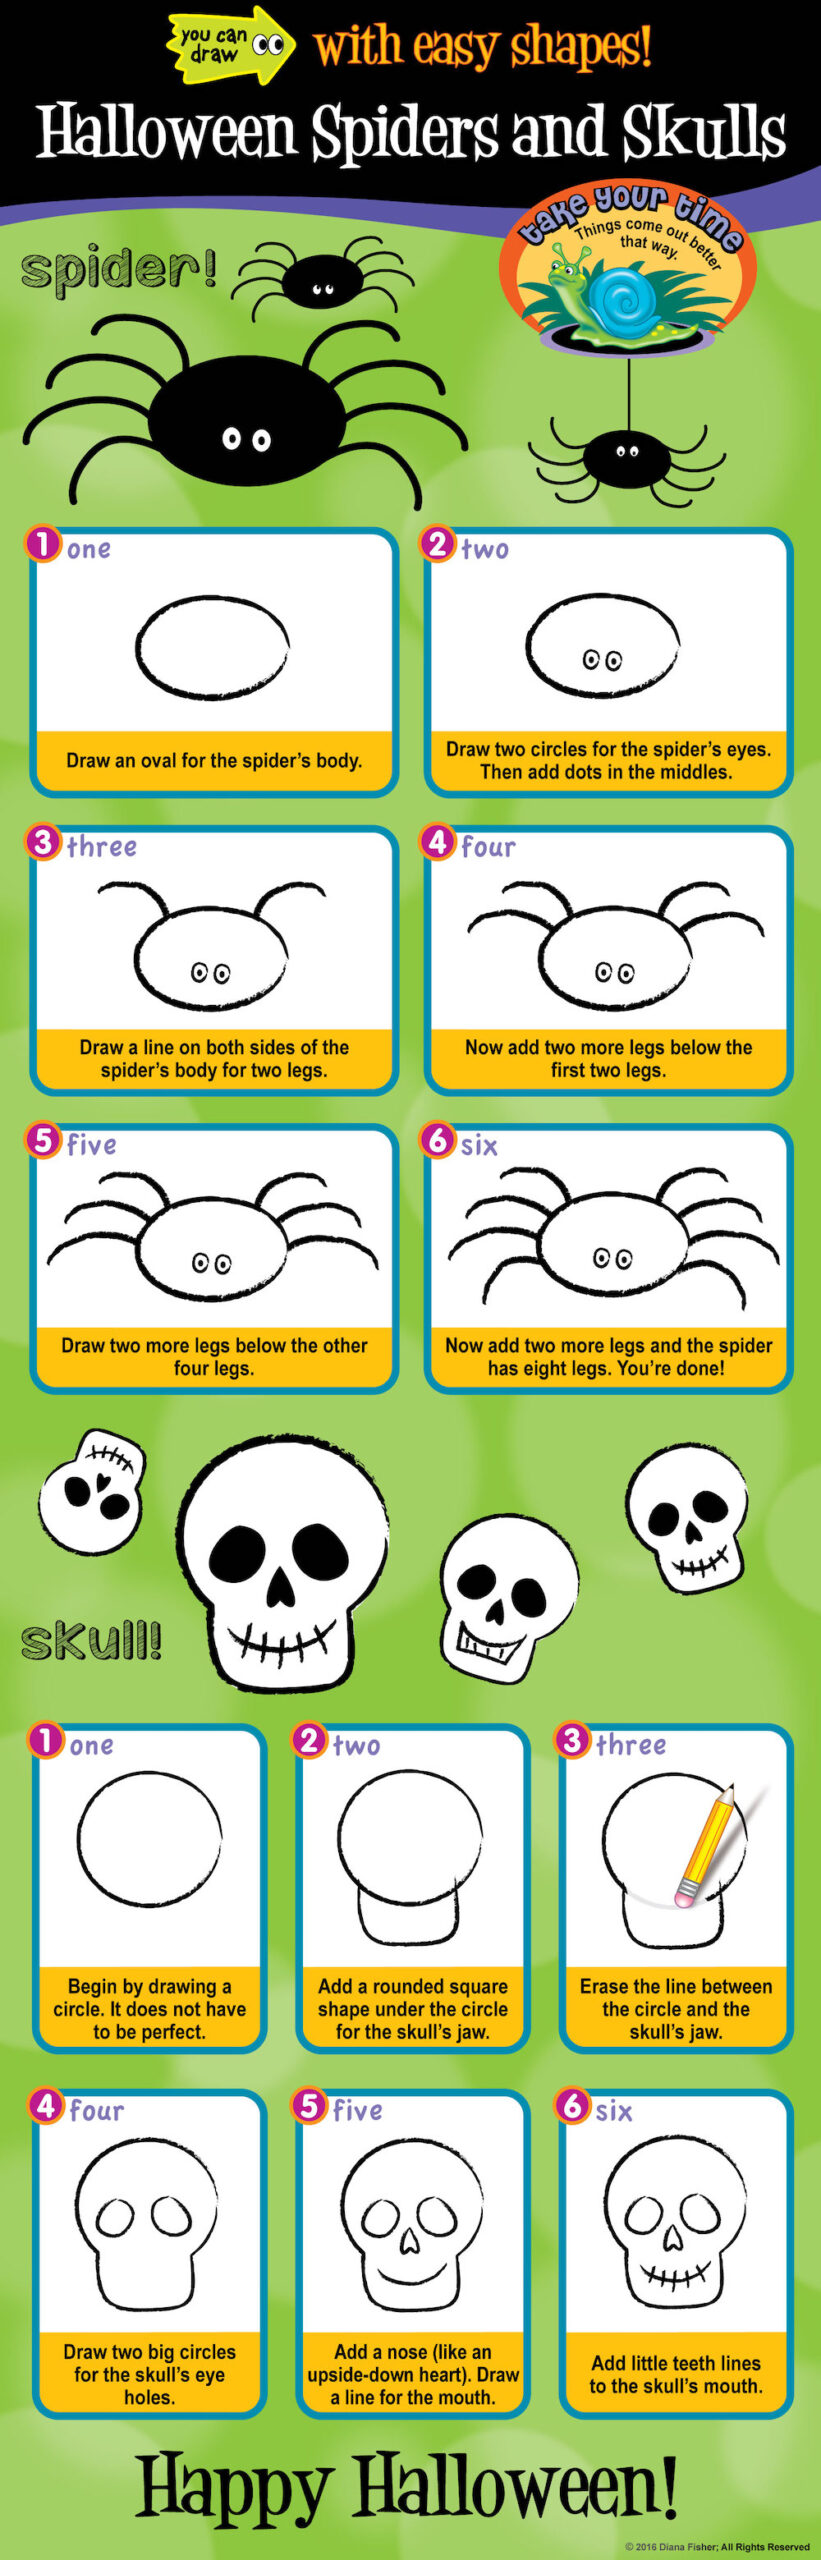 draw cute spider cute skull for children